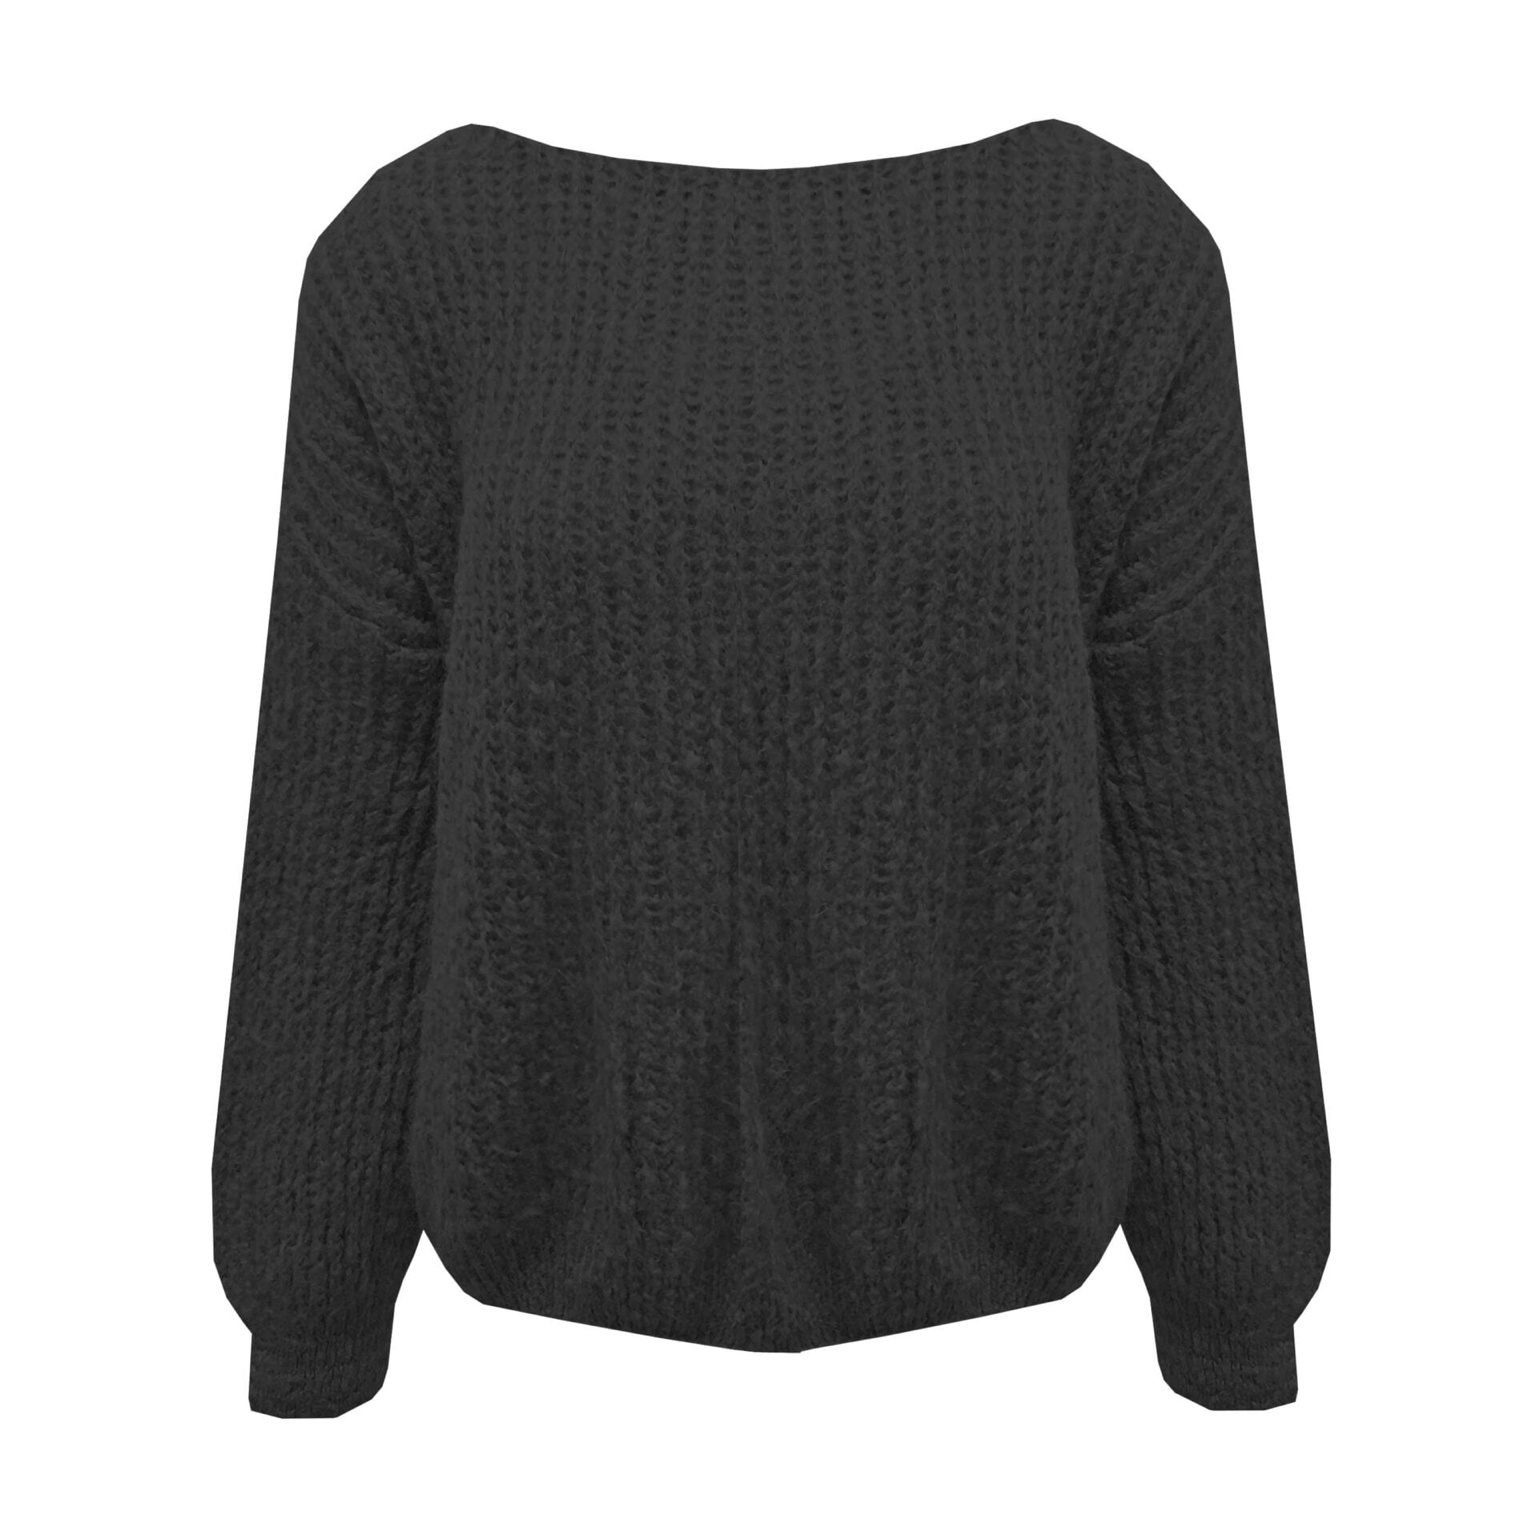 Boothals sweater Carola